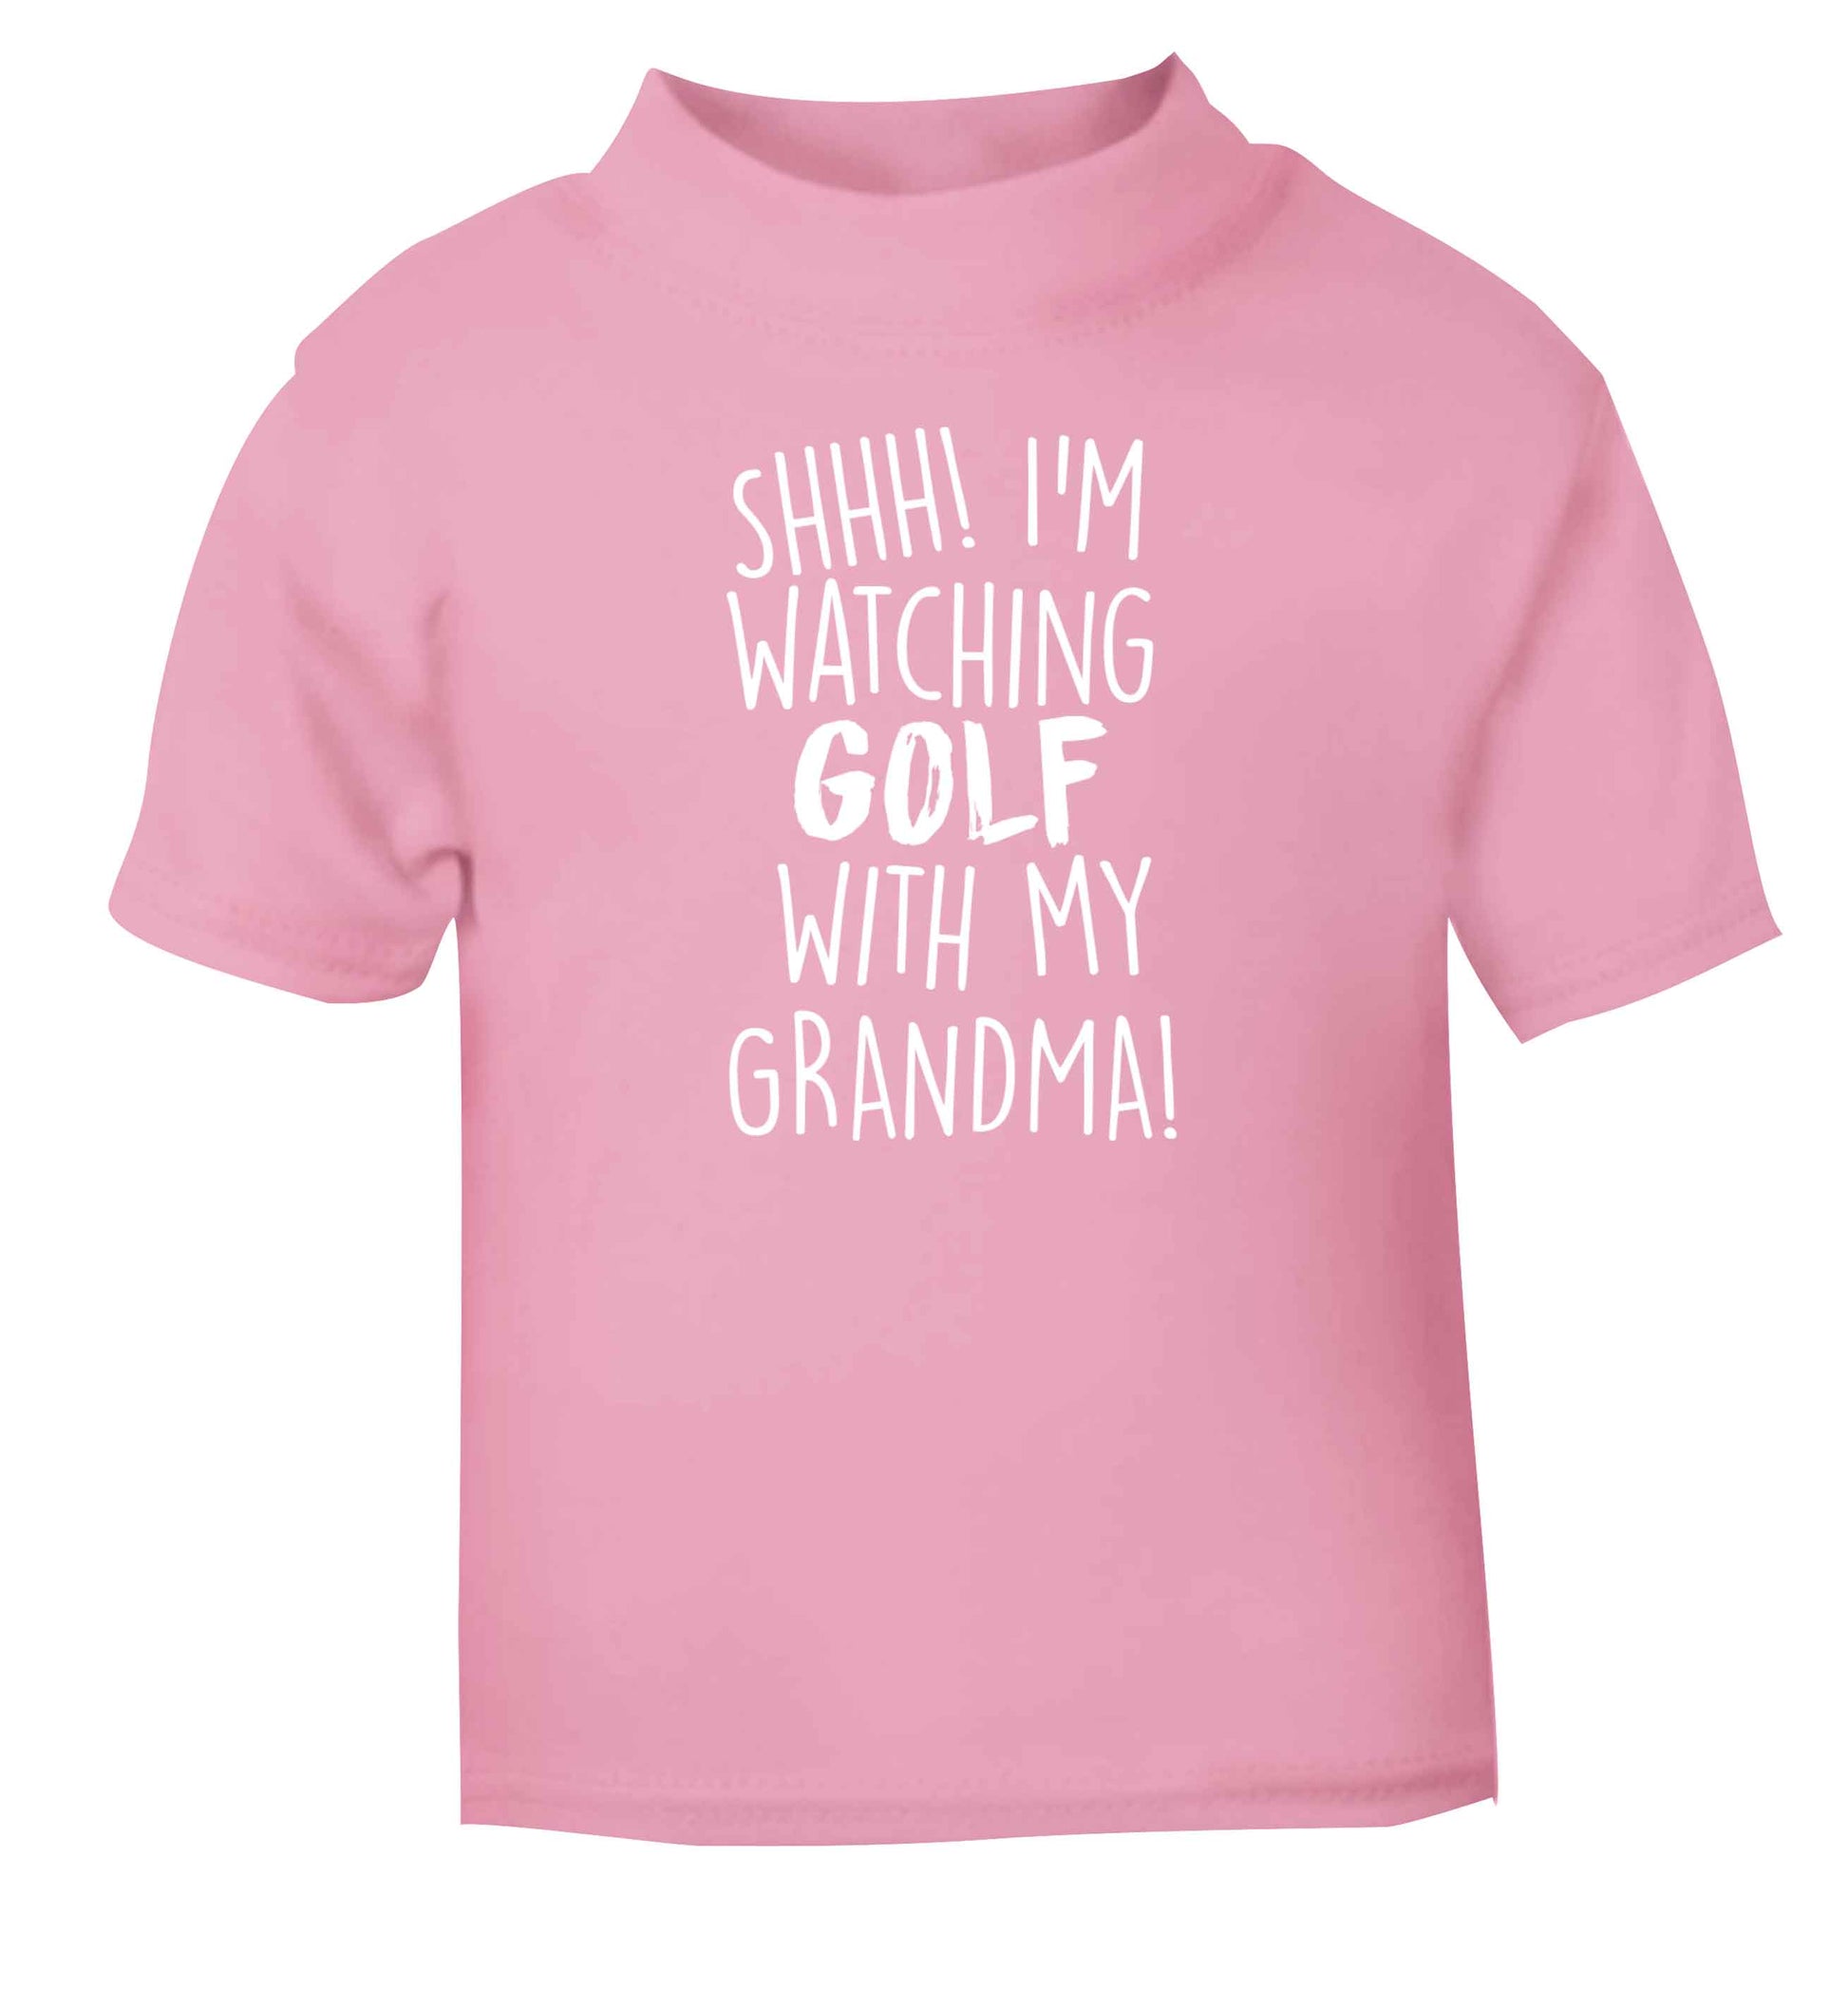 Shh I'm watching golf with my grandma light pink Baby Toddler Tshirt 2 Years